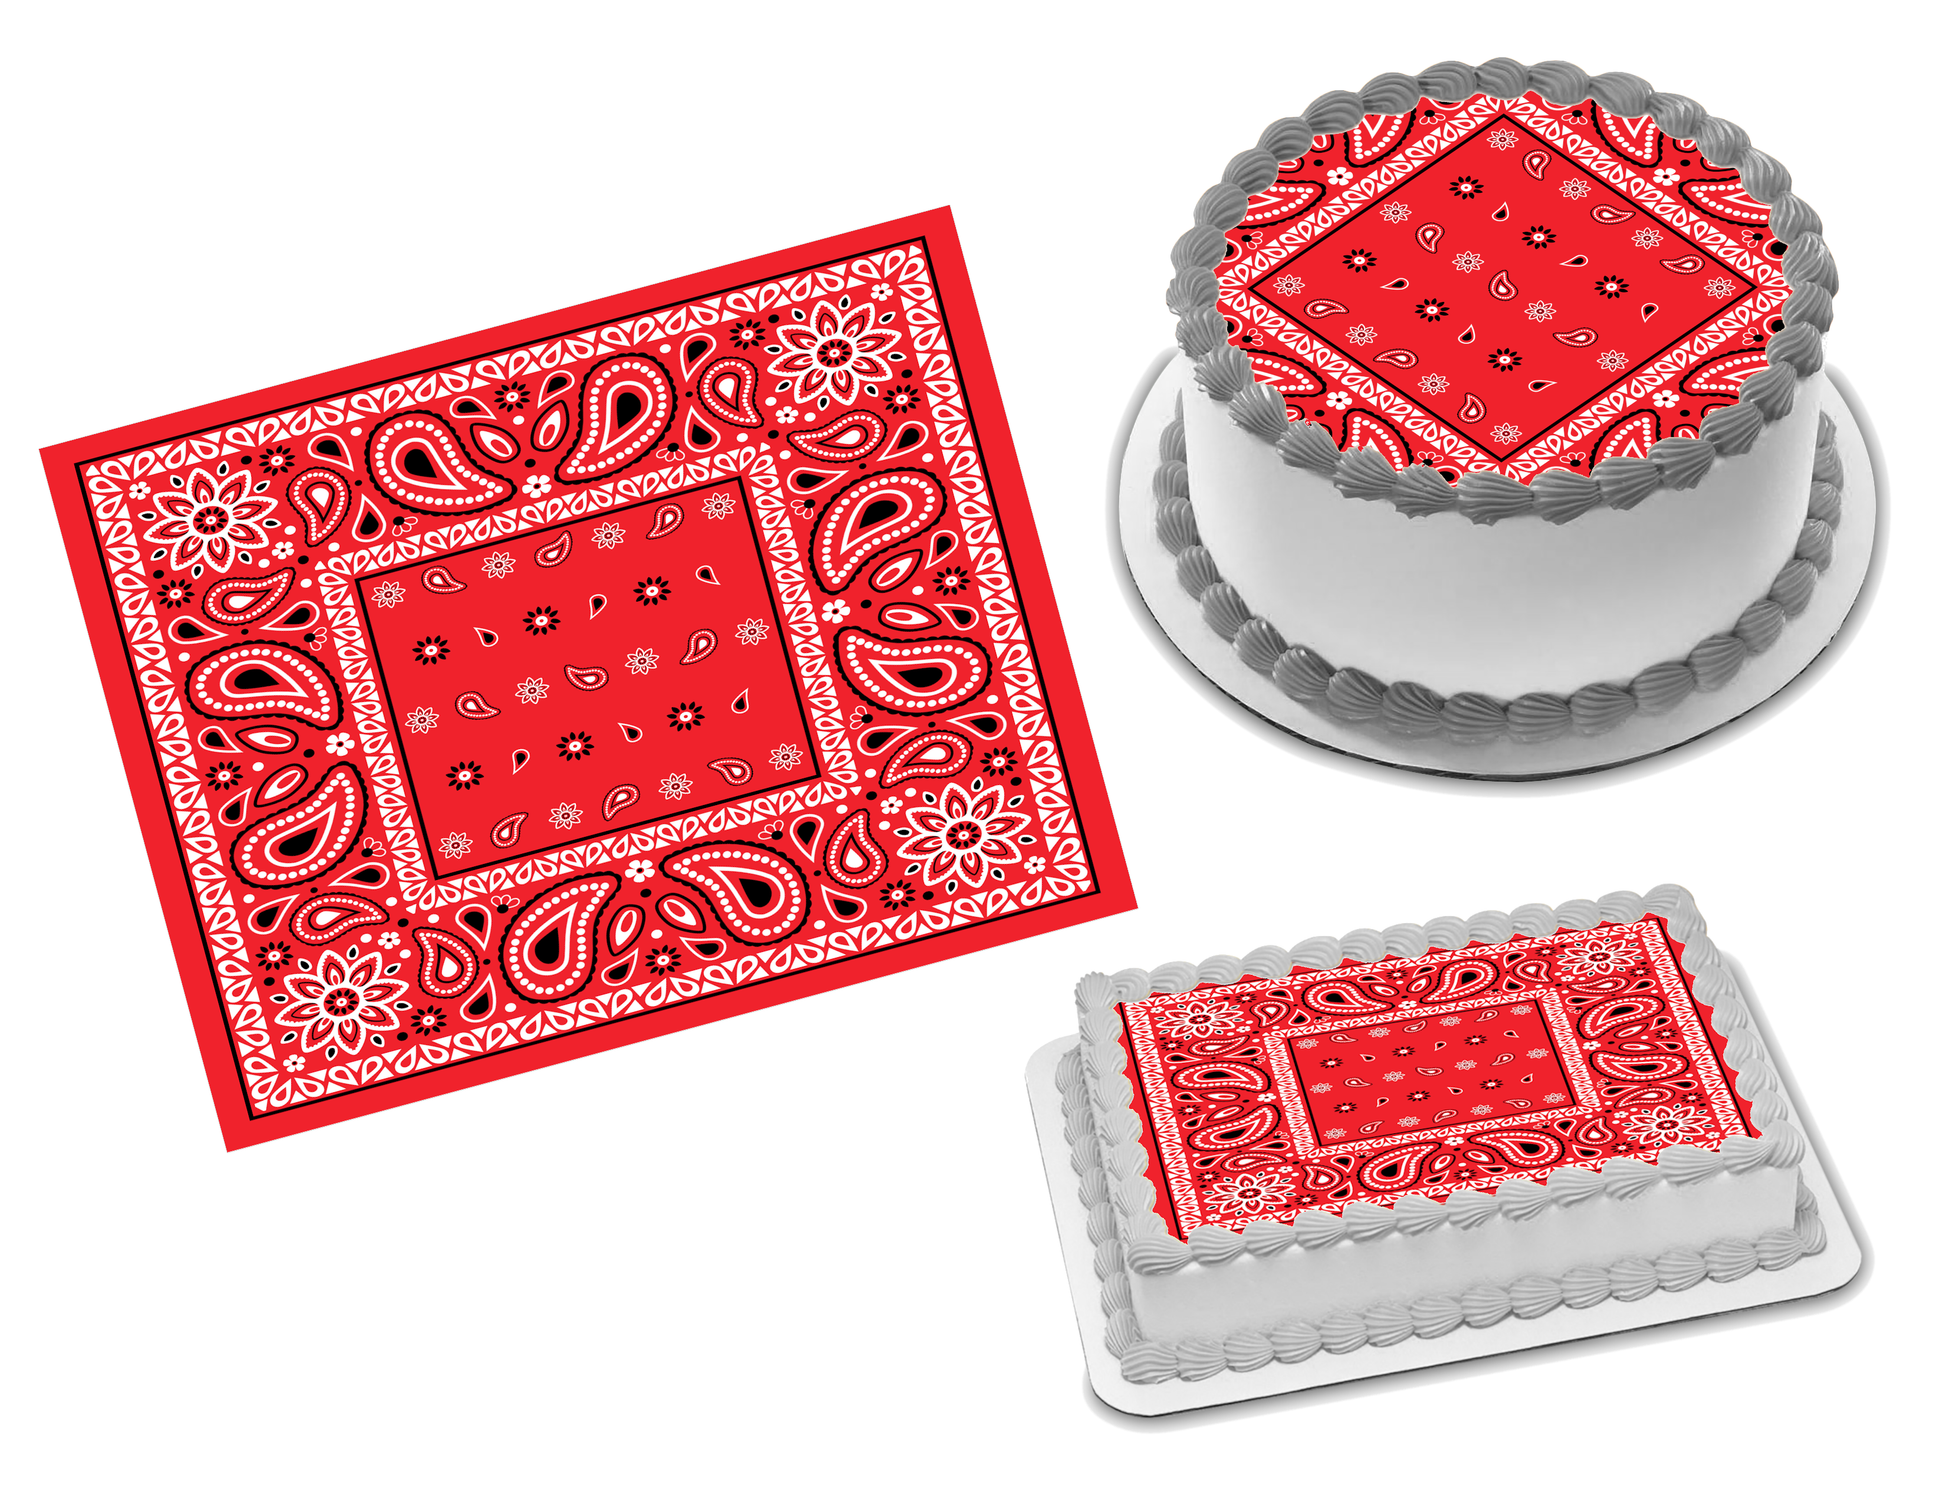 Bandana Red Edible Image Frosting Sheet #2 Topper (70+ sizes